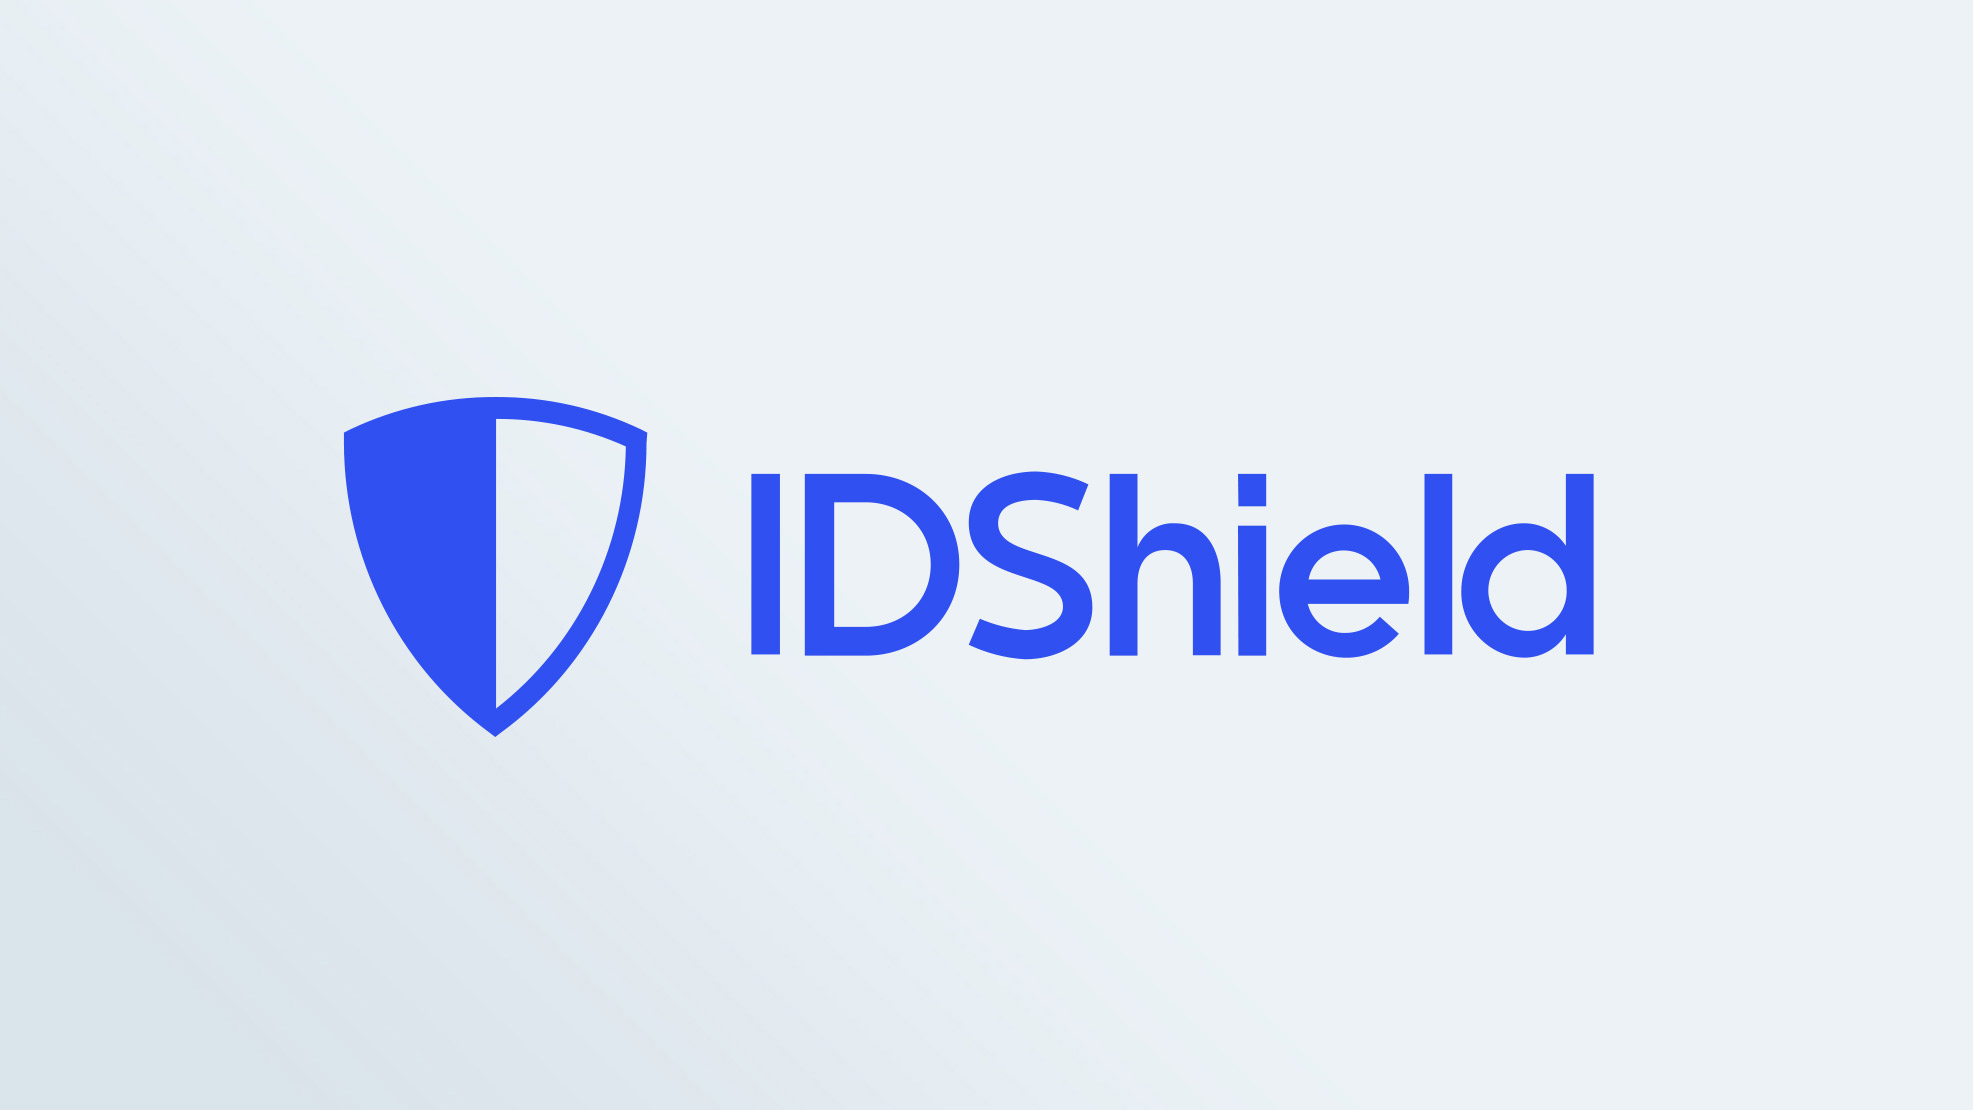 IDShield logo